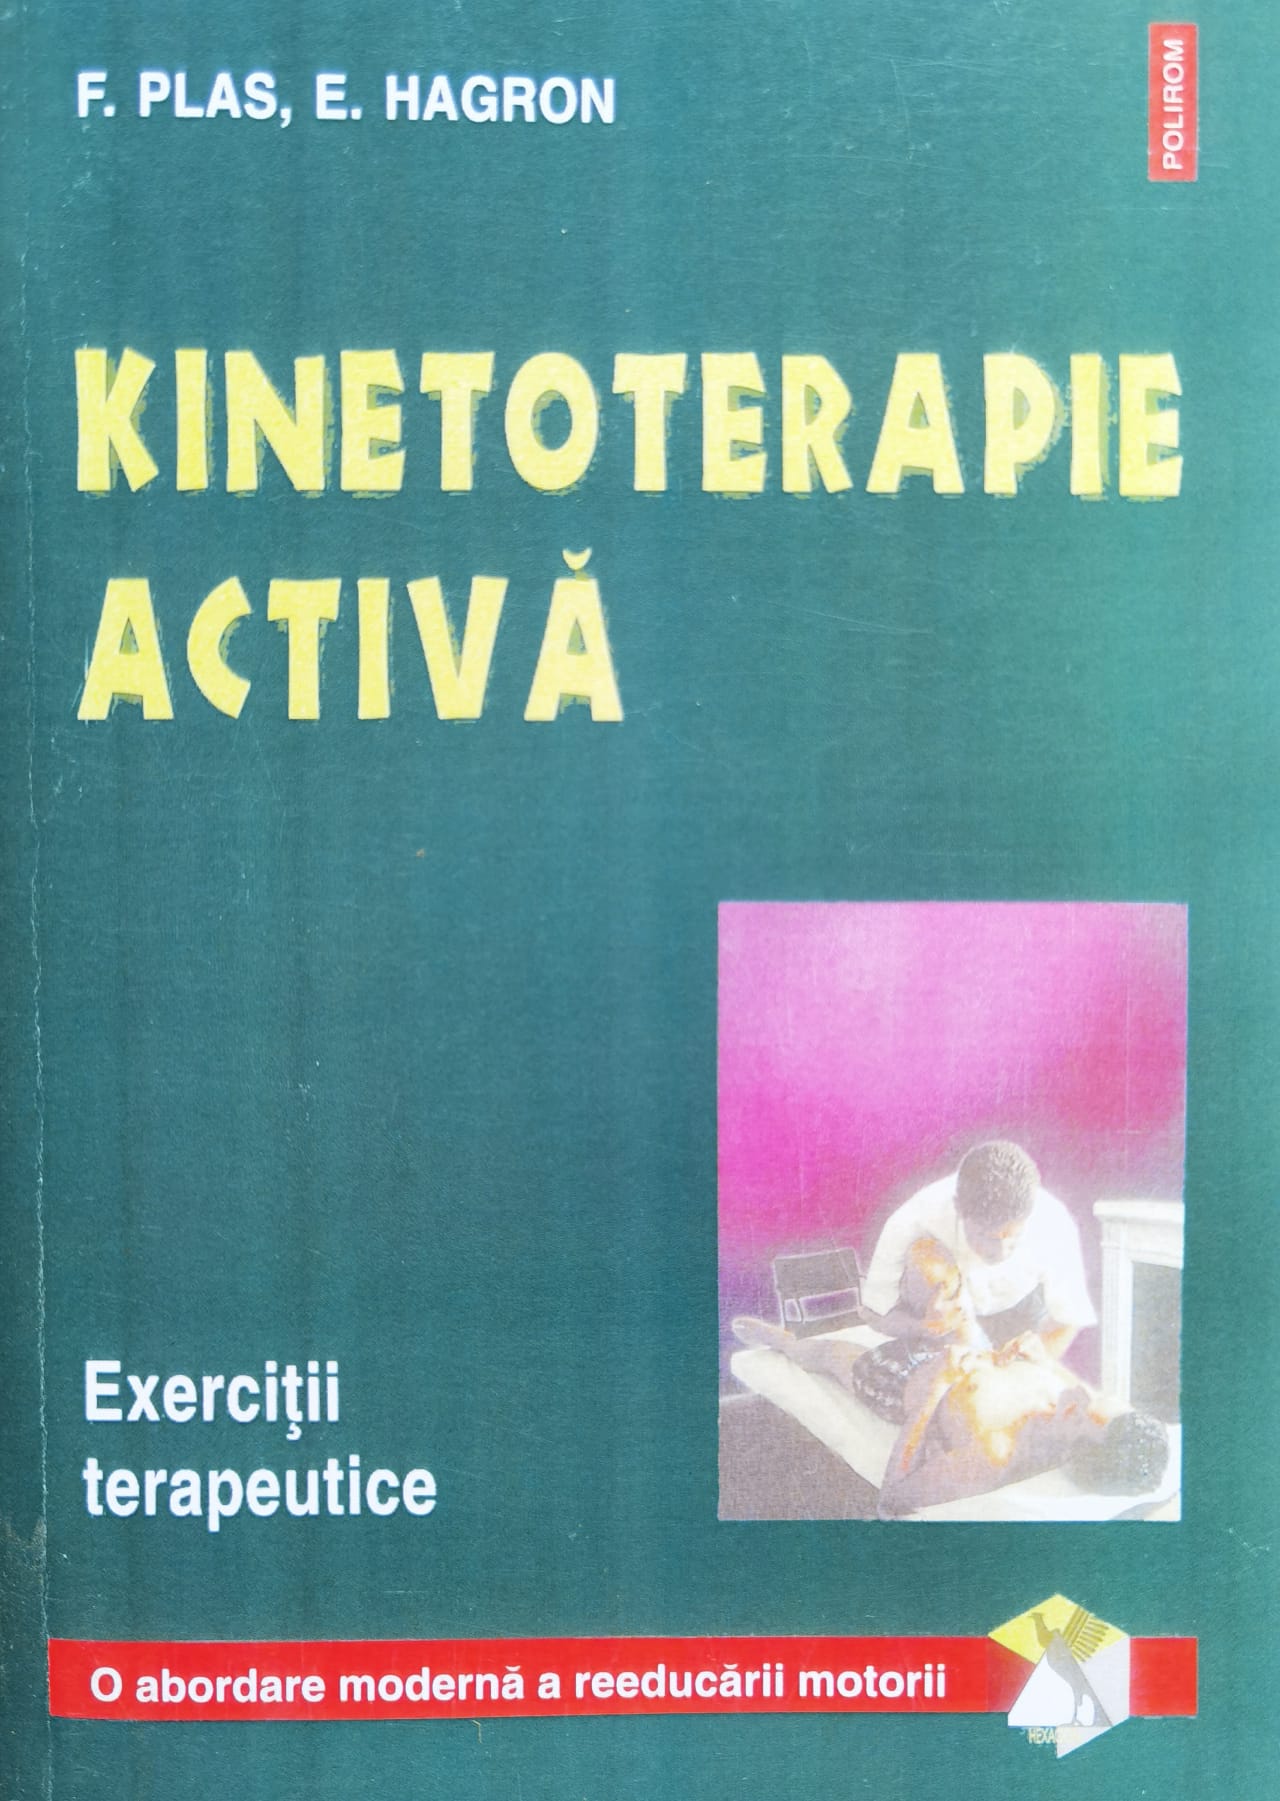 kinetoterapie activa                                                                                 f.plas e.hagron                                                                                     